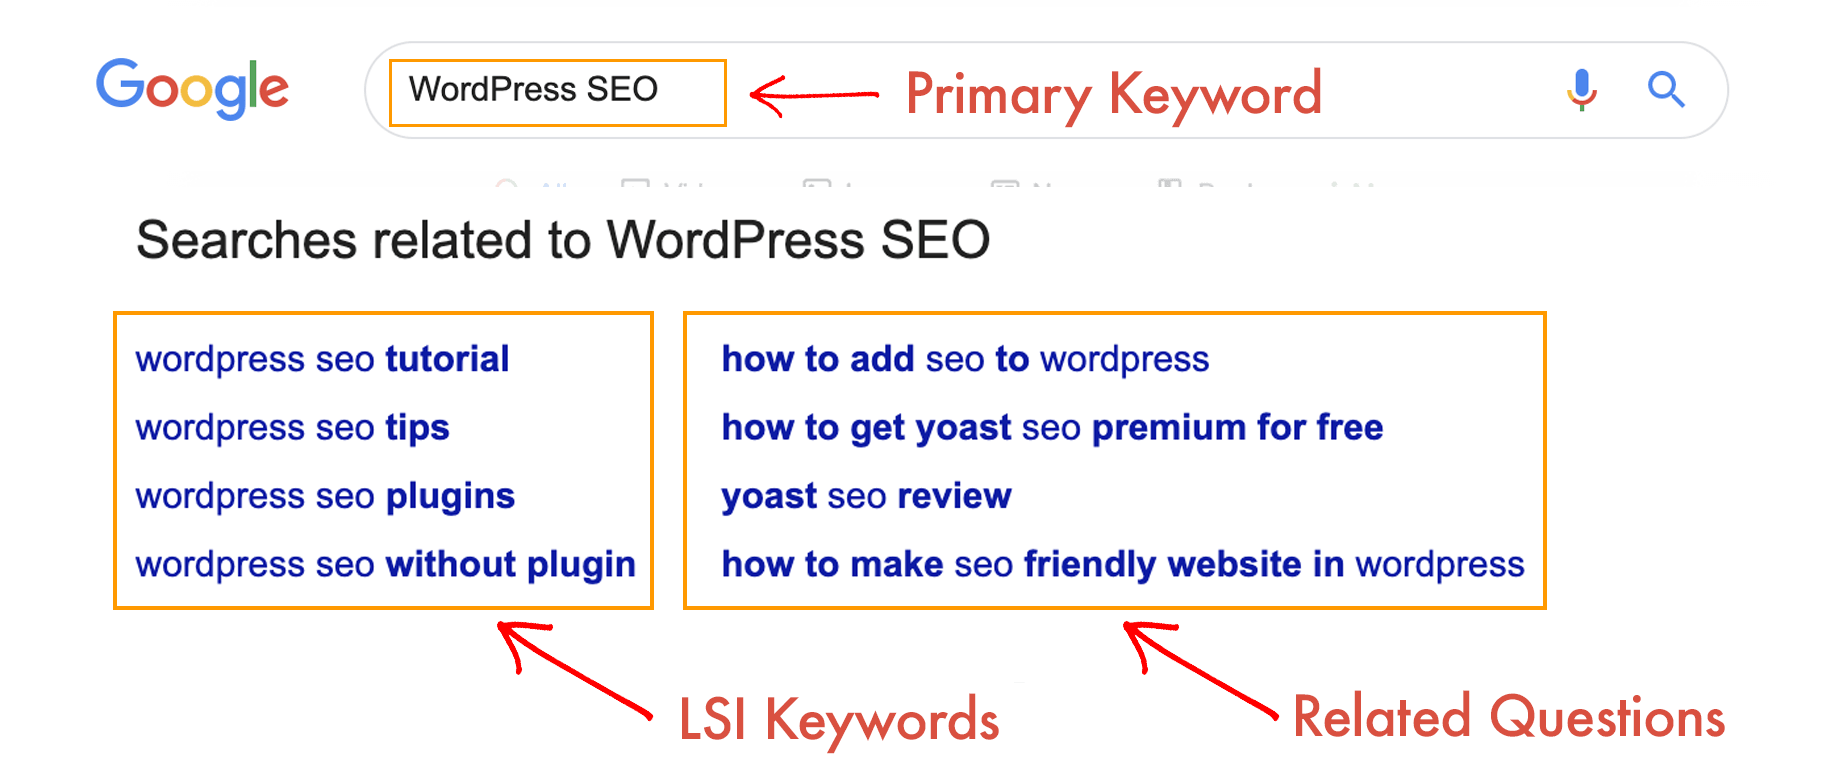 LSI Keyword Example